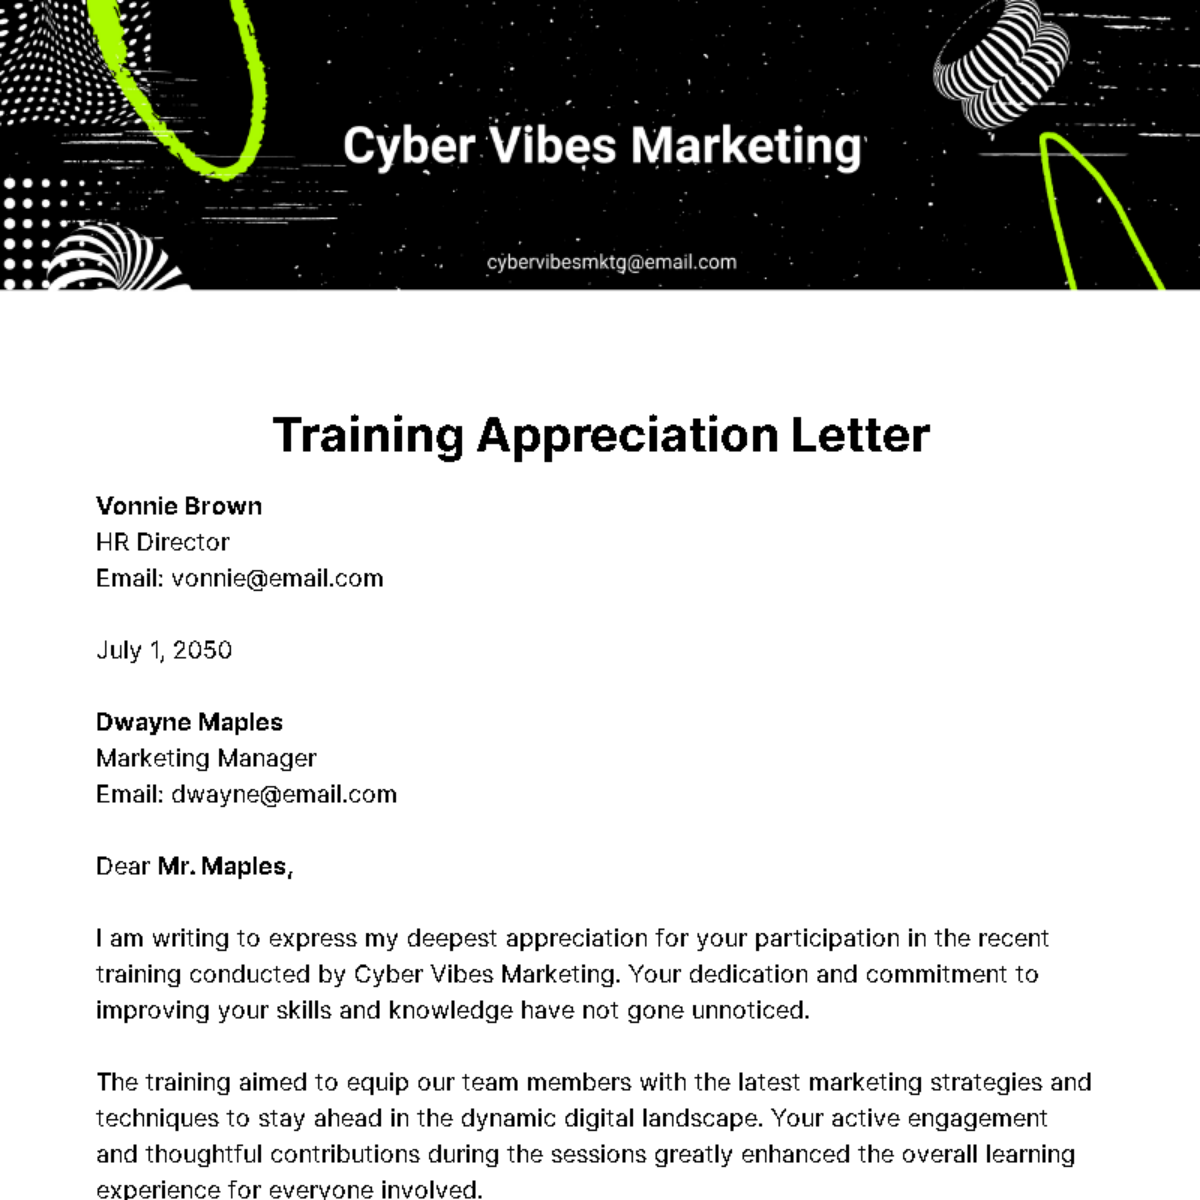 Training Appreciation Letter Template